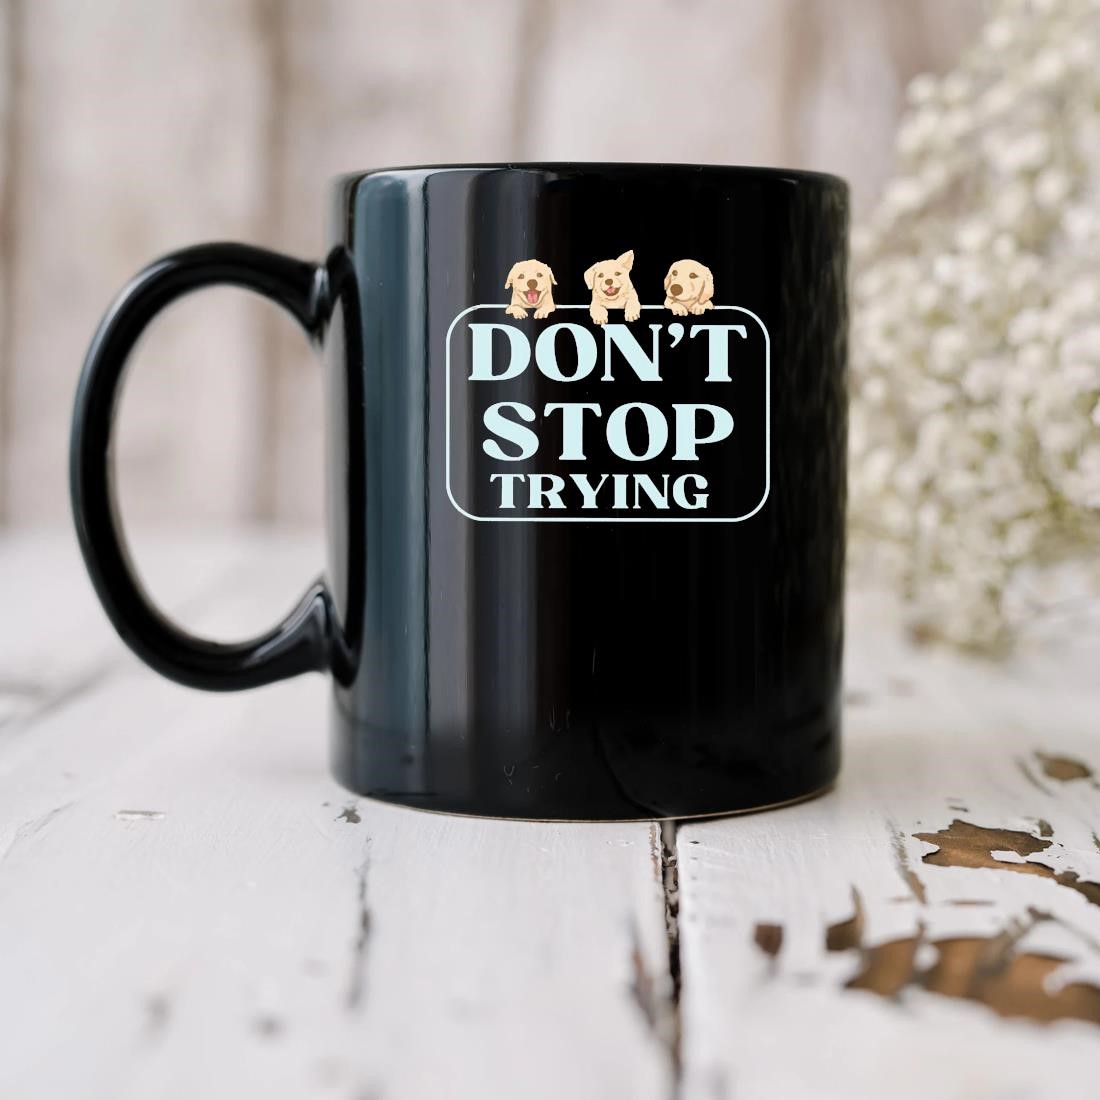 Don’t Stop Trying Mug biu.jpg